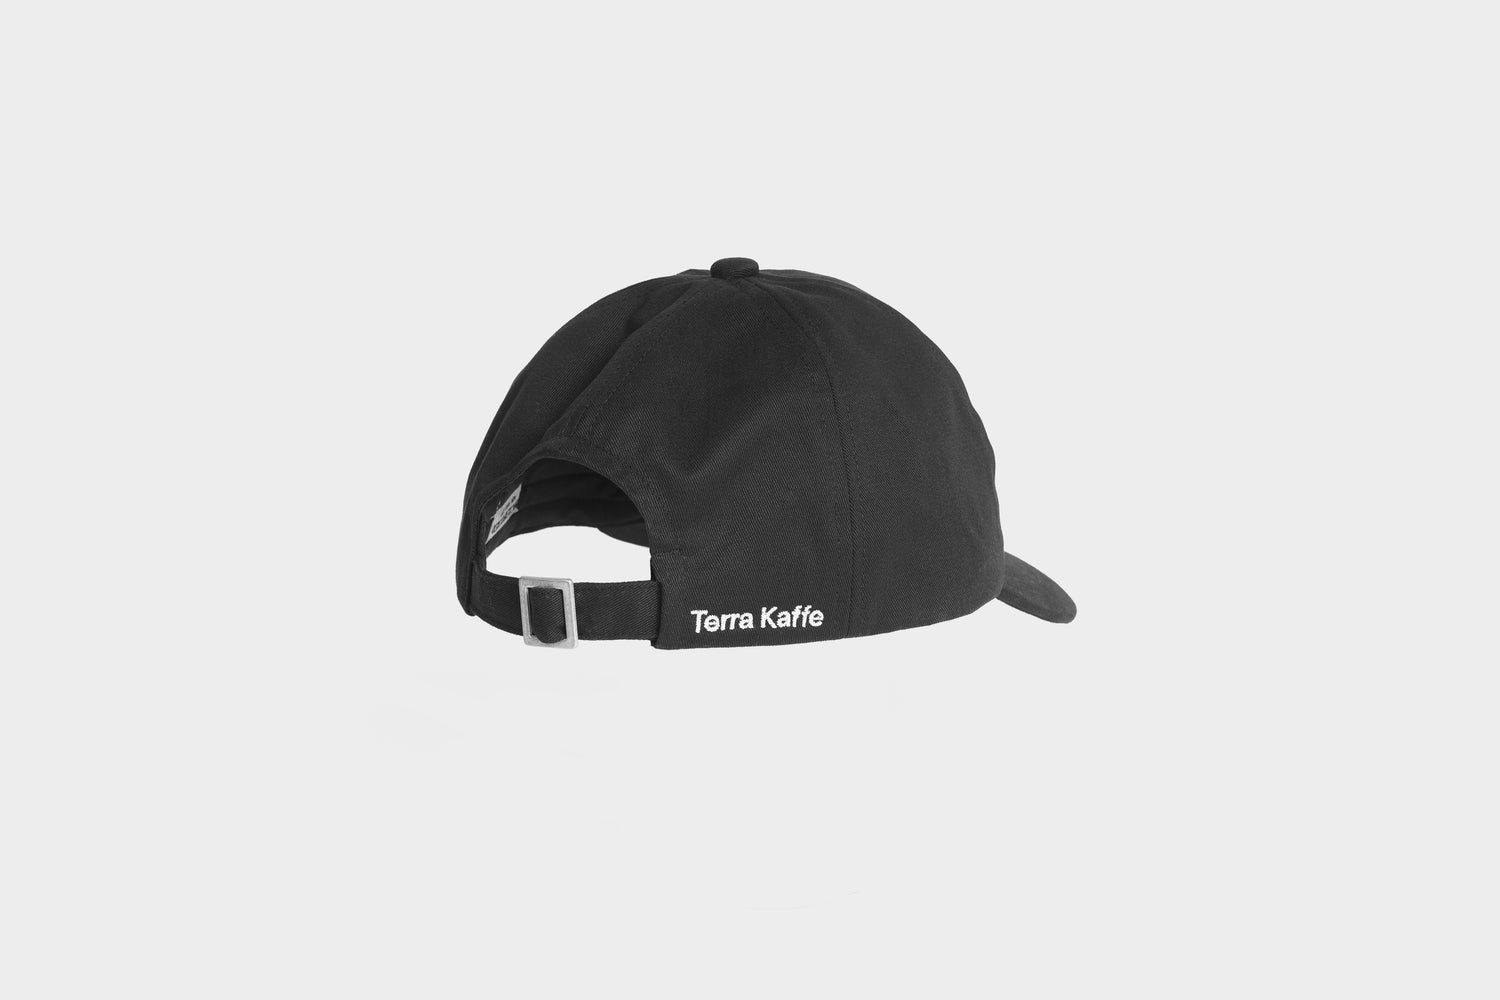 Terra Kaffe | Side view of black baseball cap with "Terra Kaffe" embroidery 